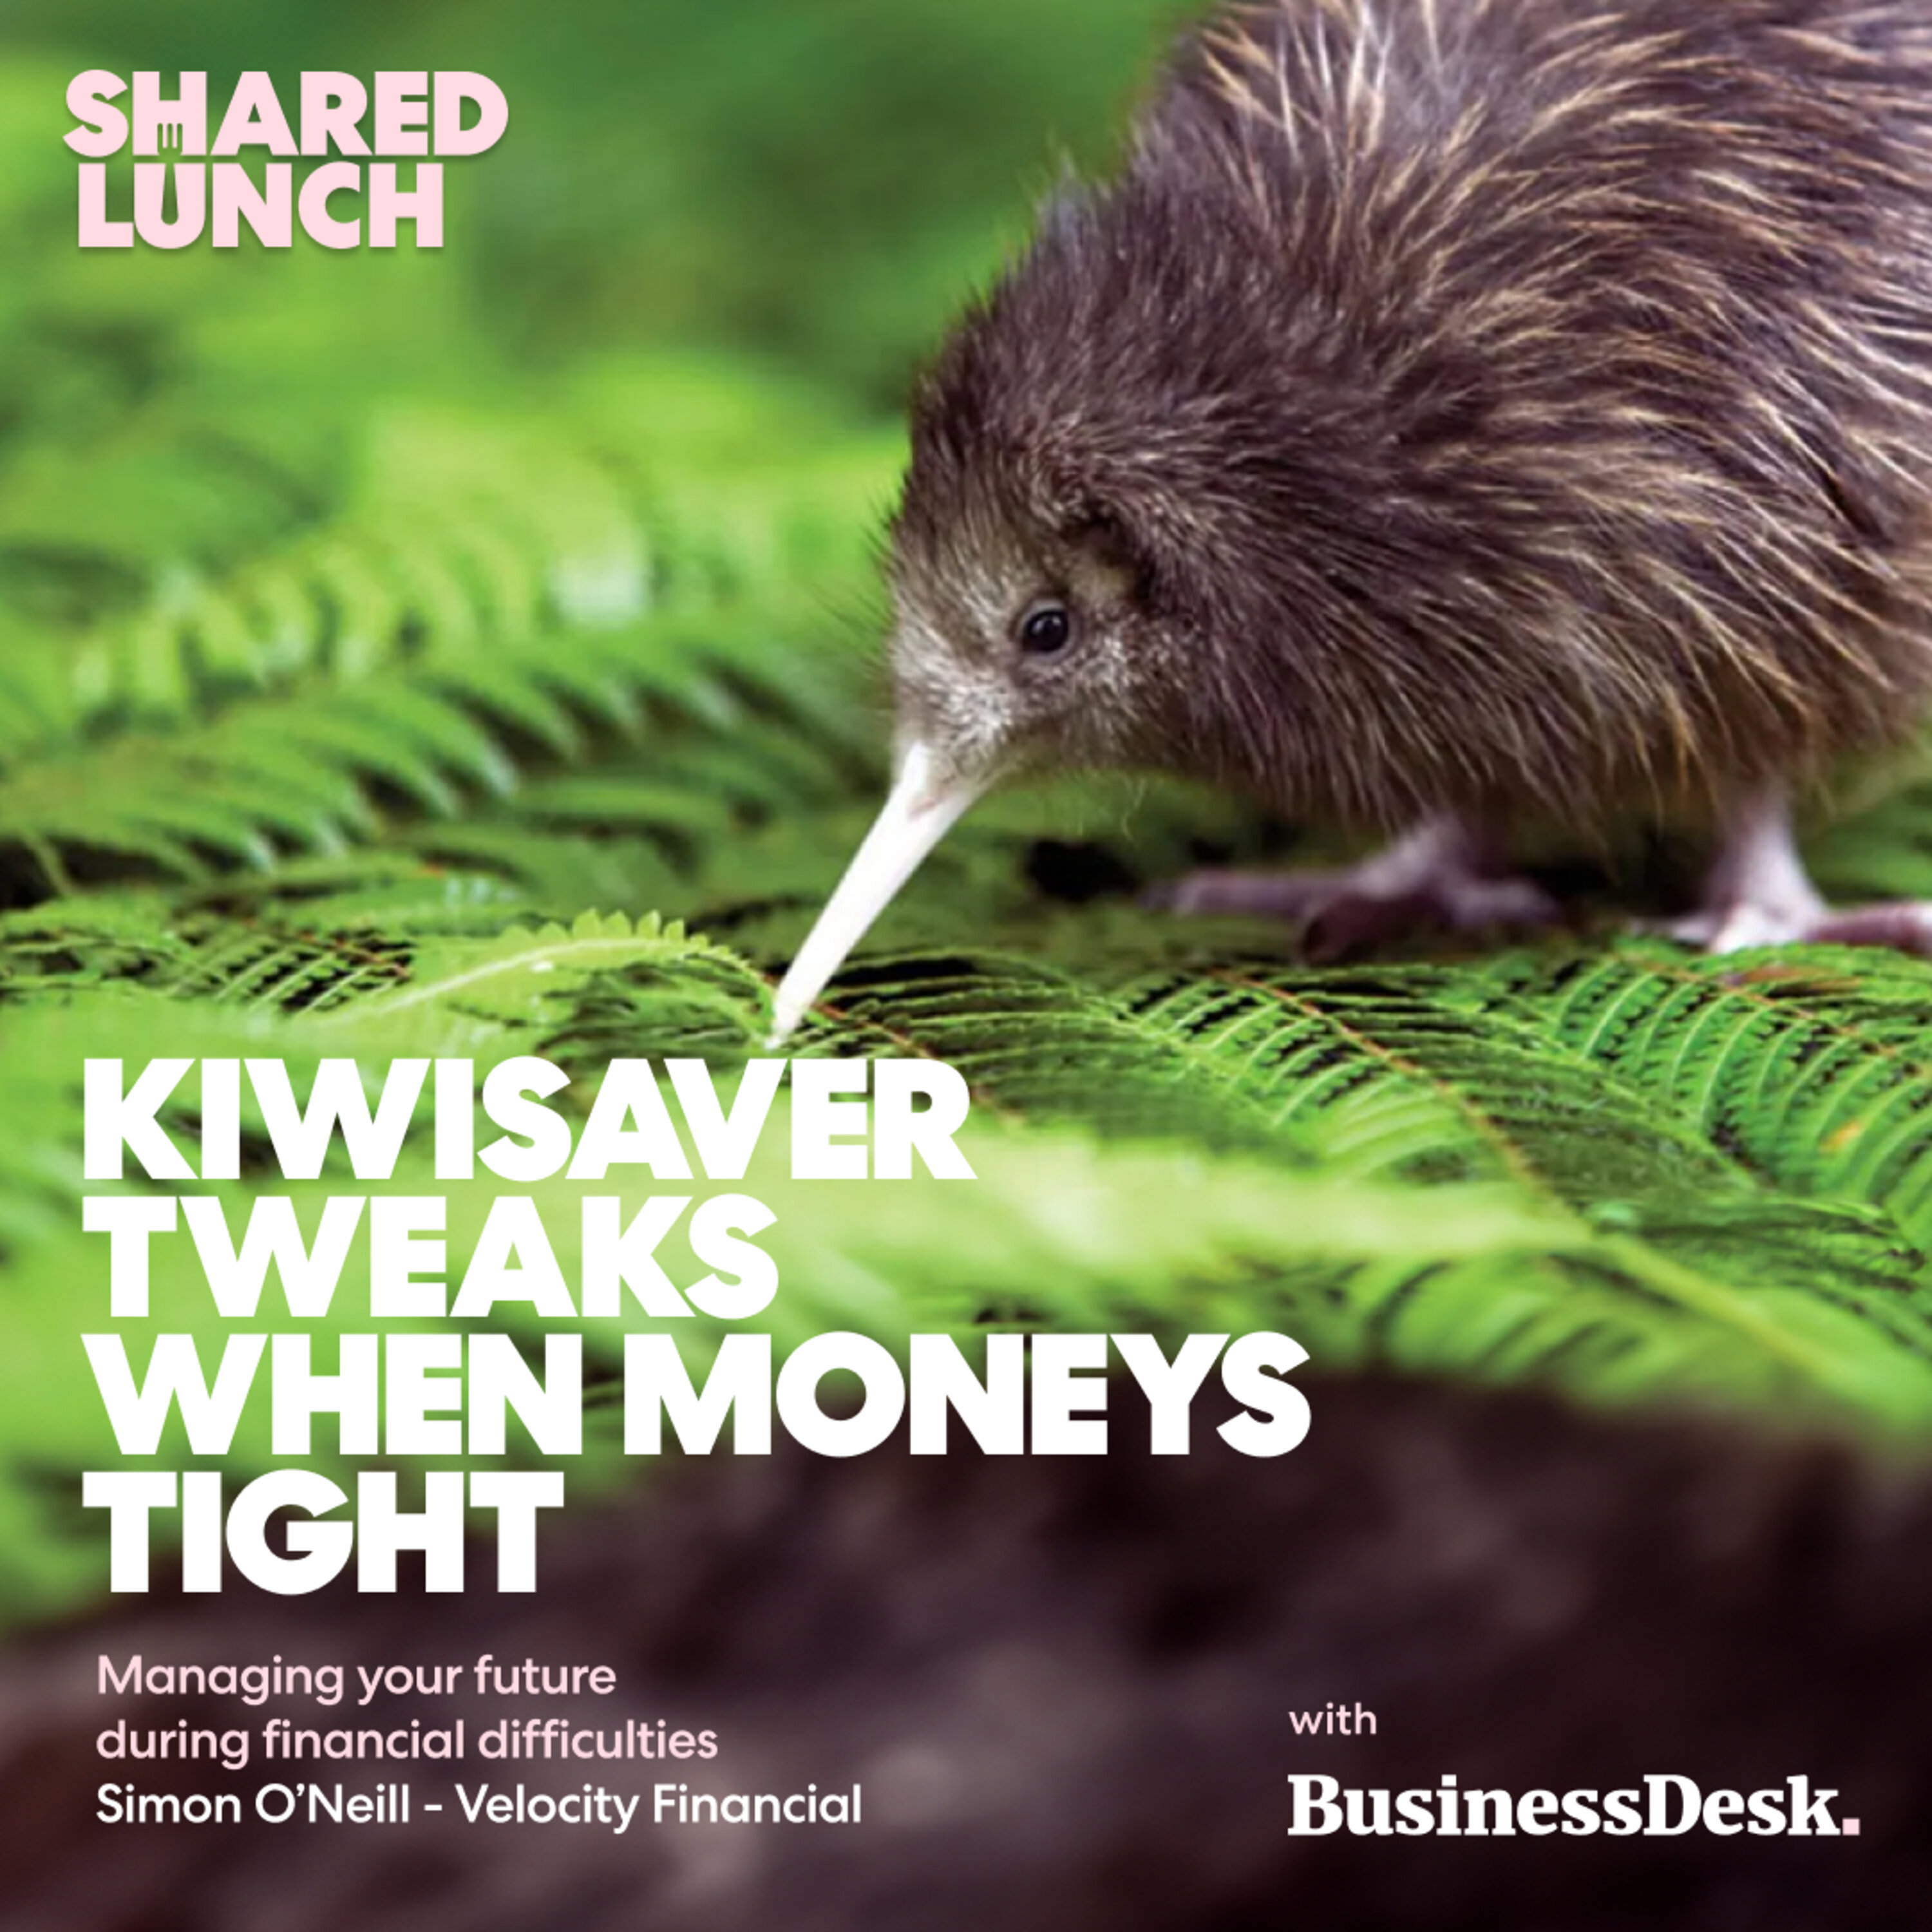 KiwiSaver tweaks when money’s tight